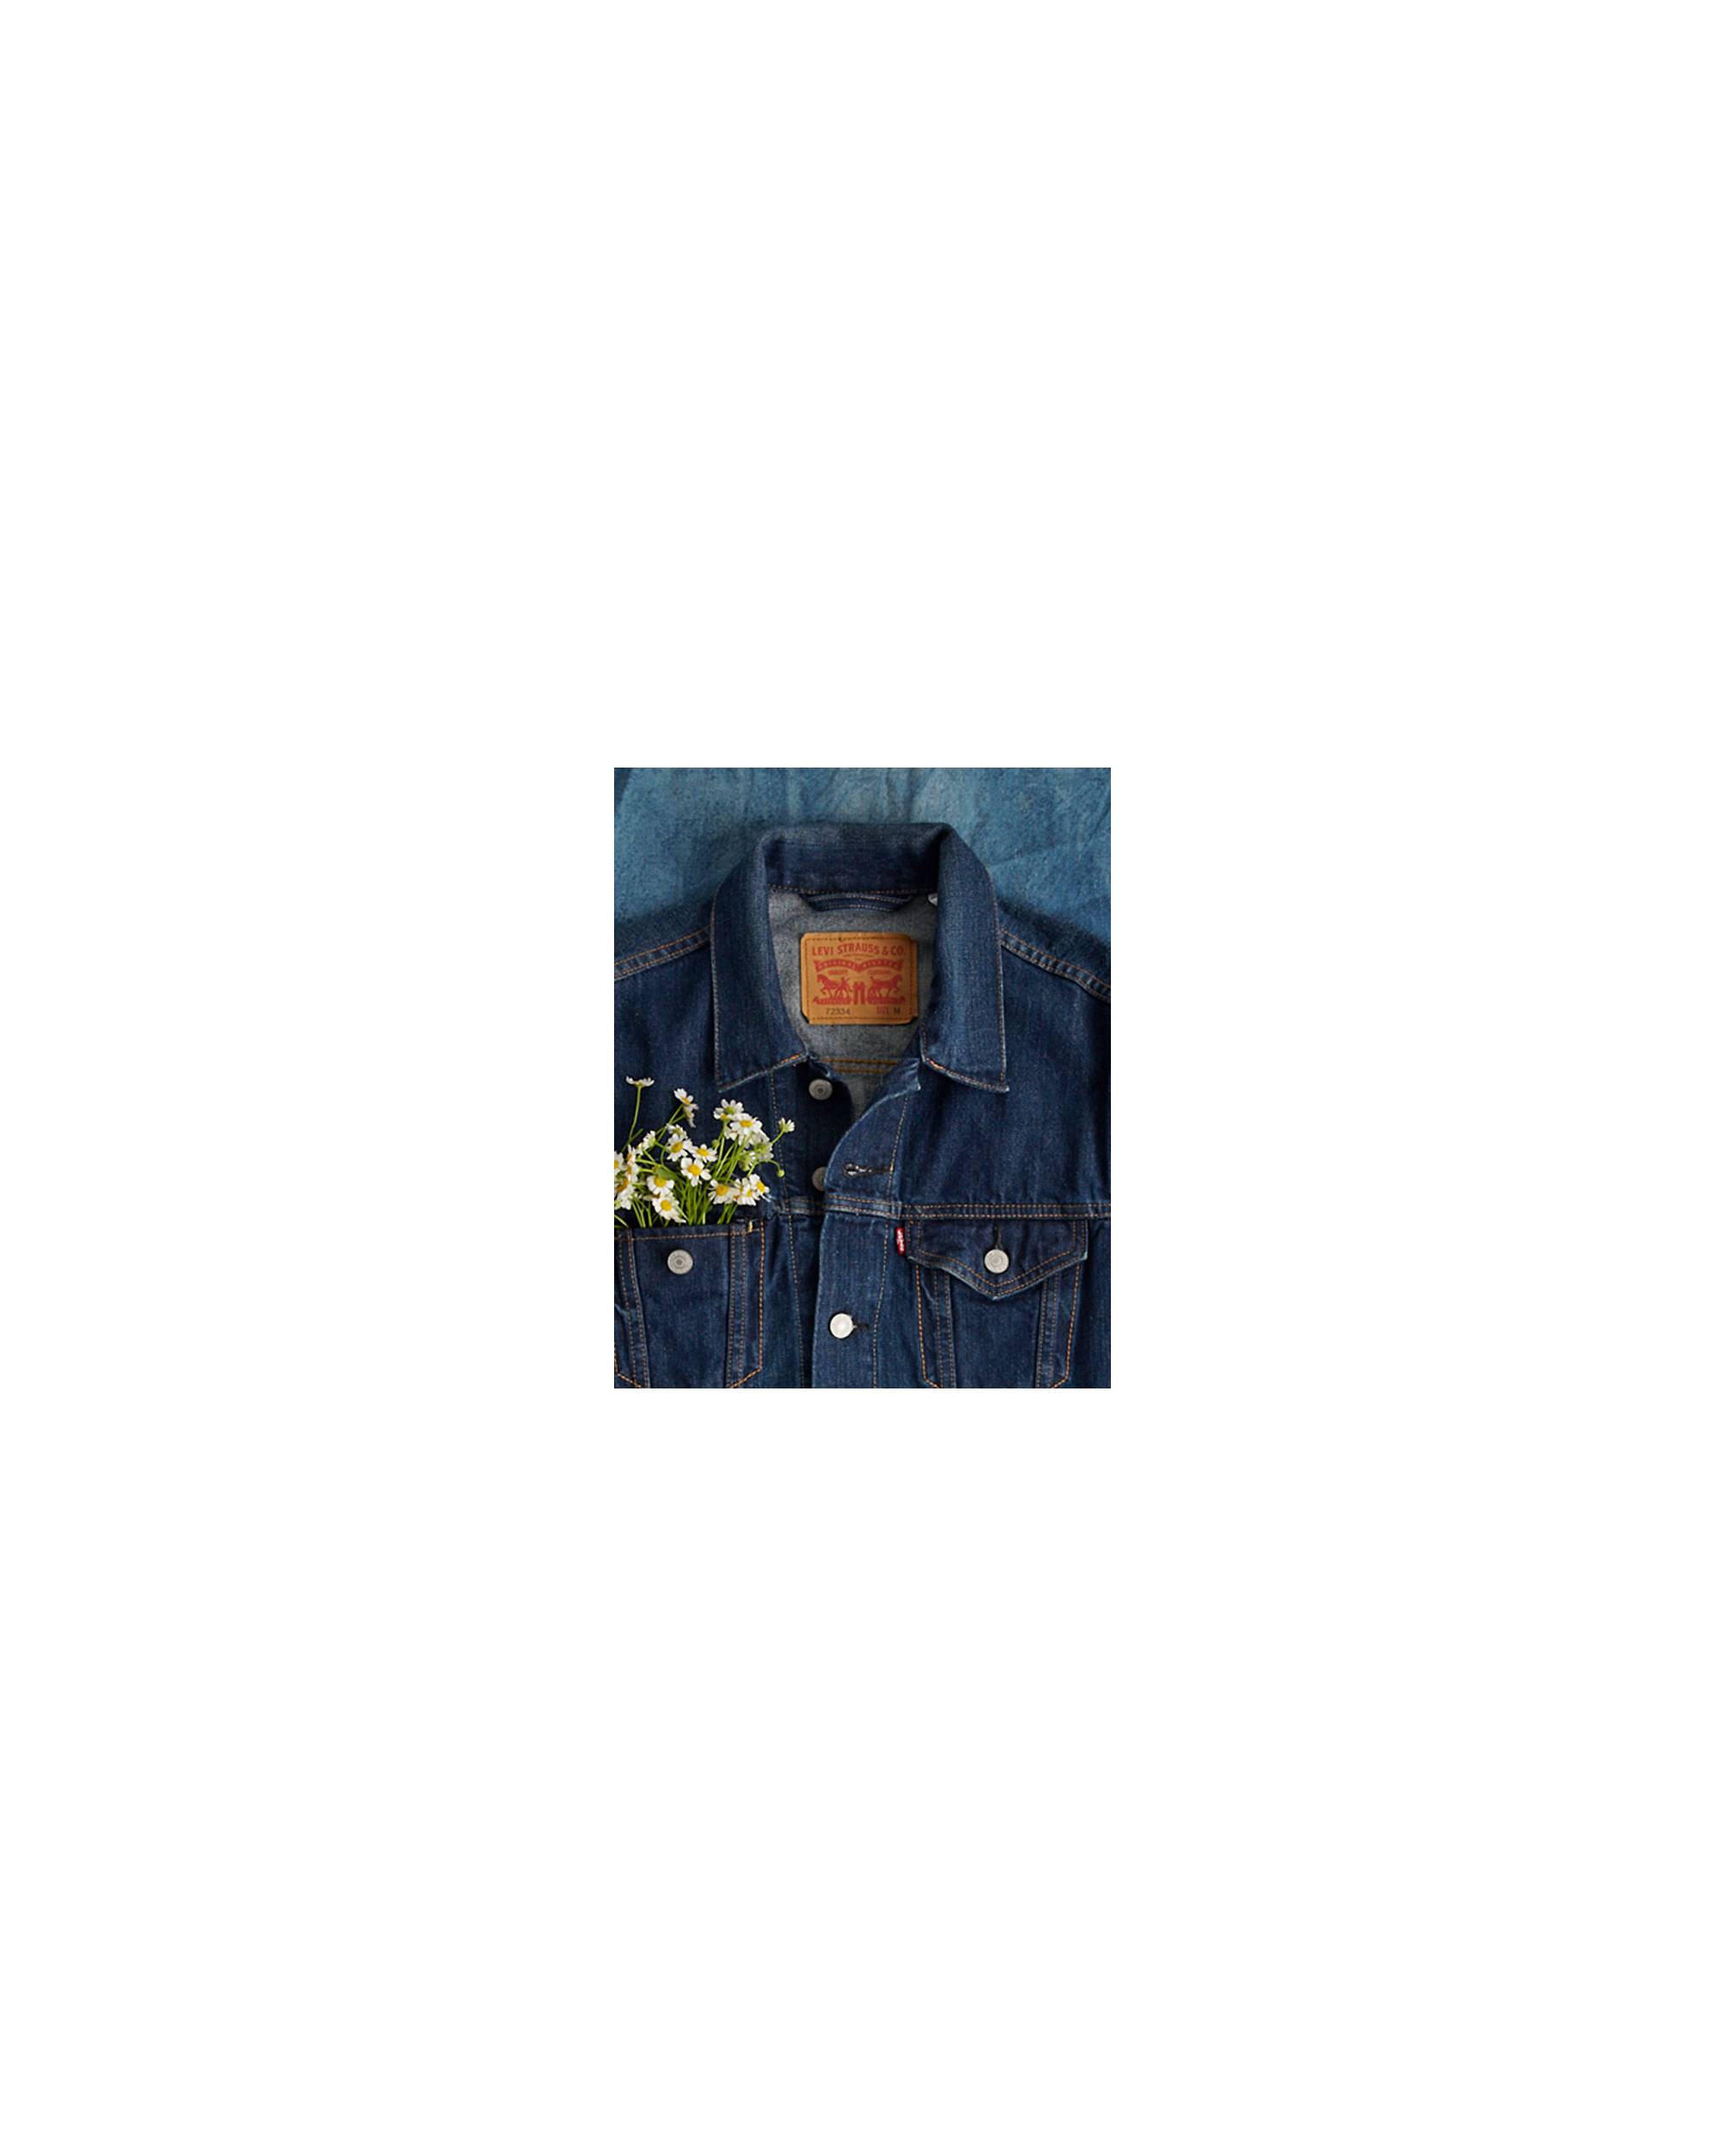 denim jacket with flower in pocket